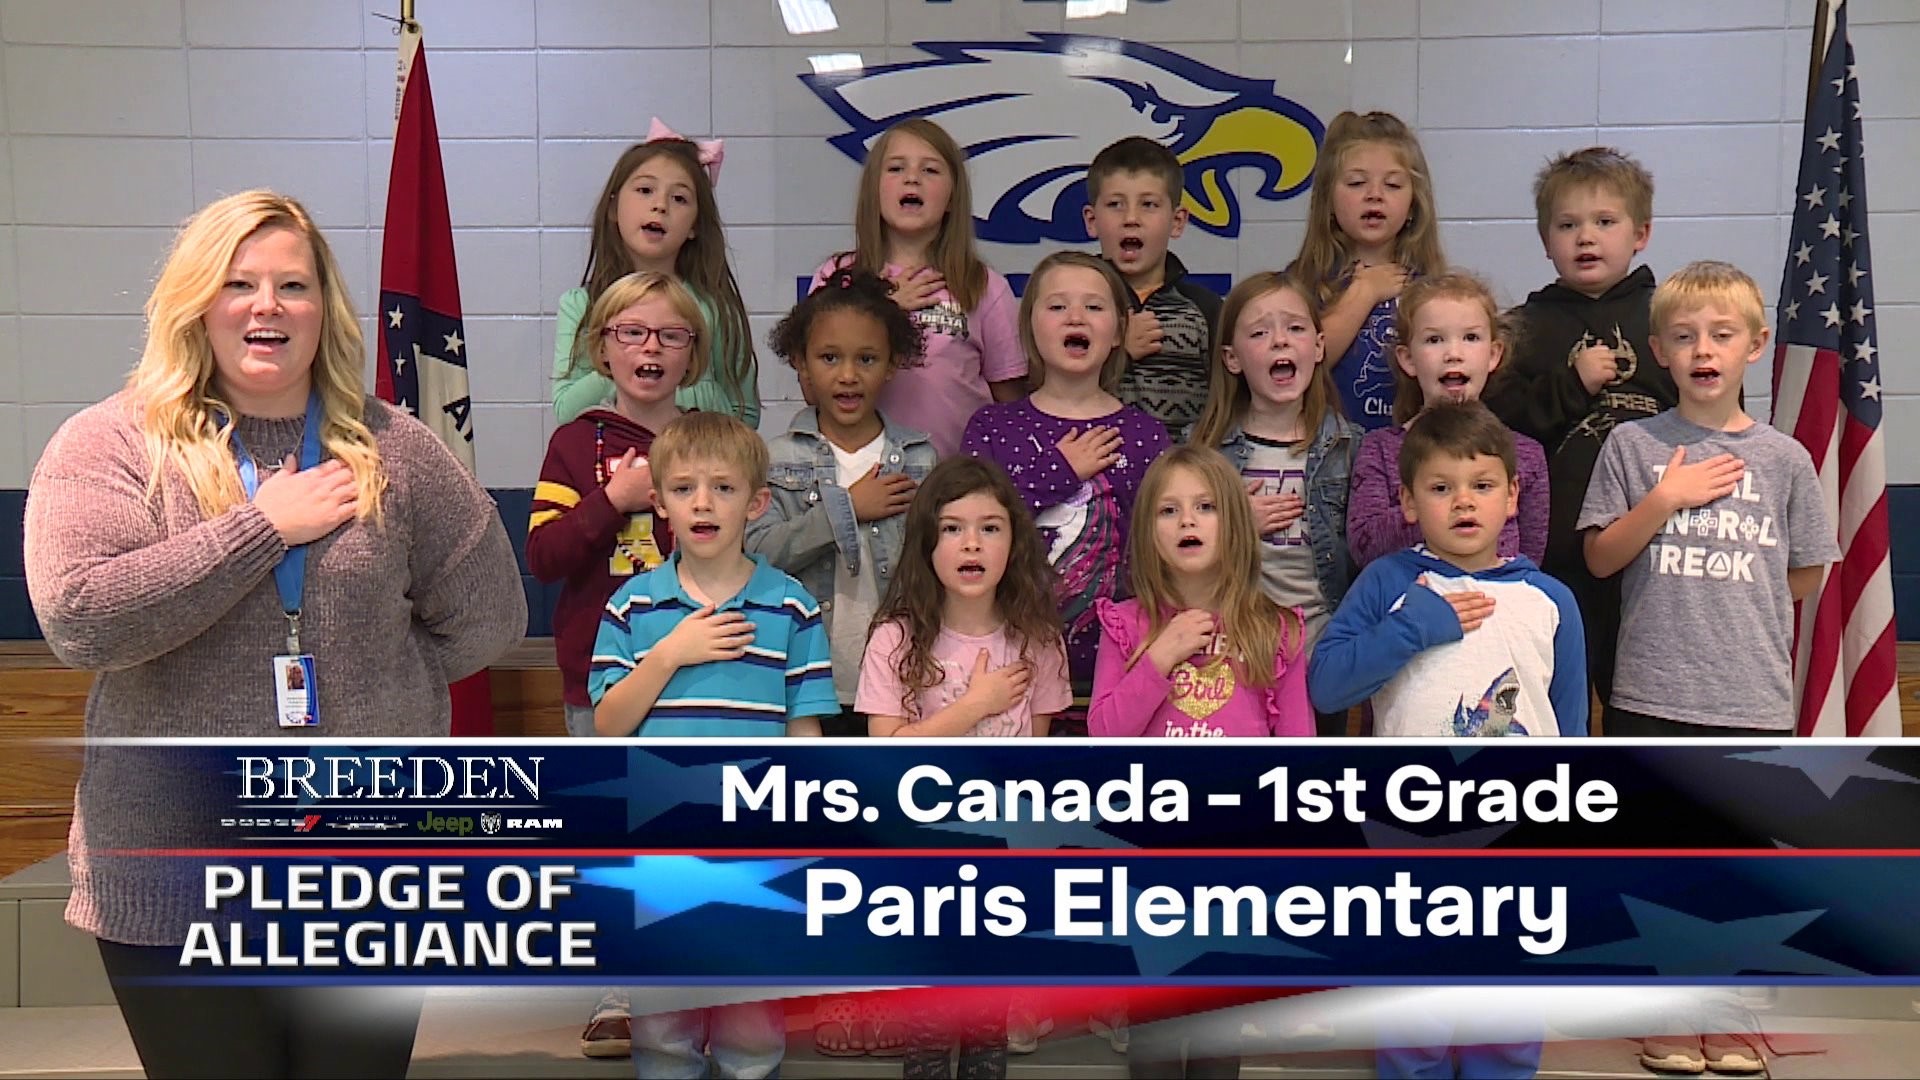 Mrs. Canada 1st Grade Paris Elementary